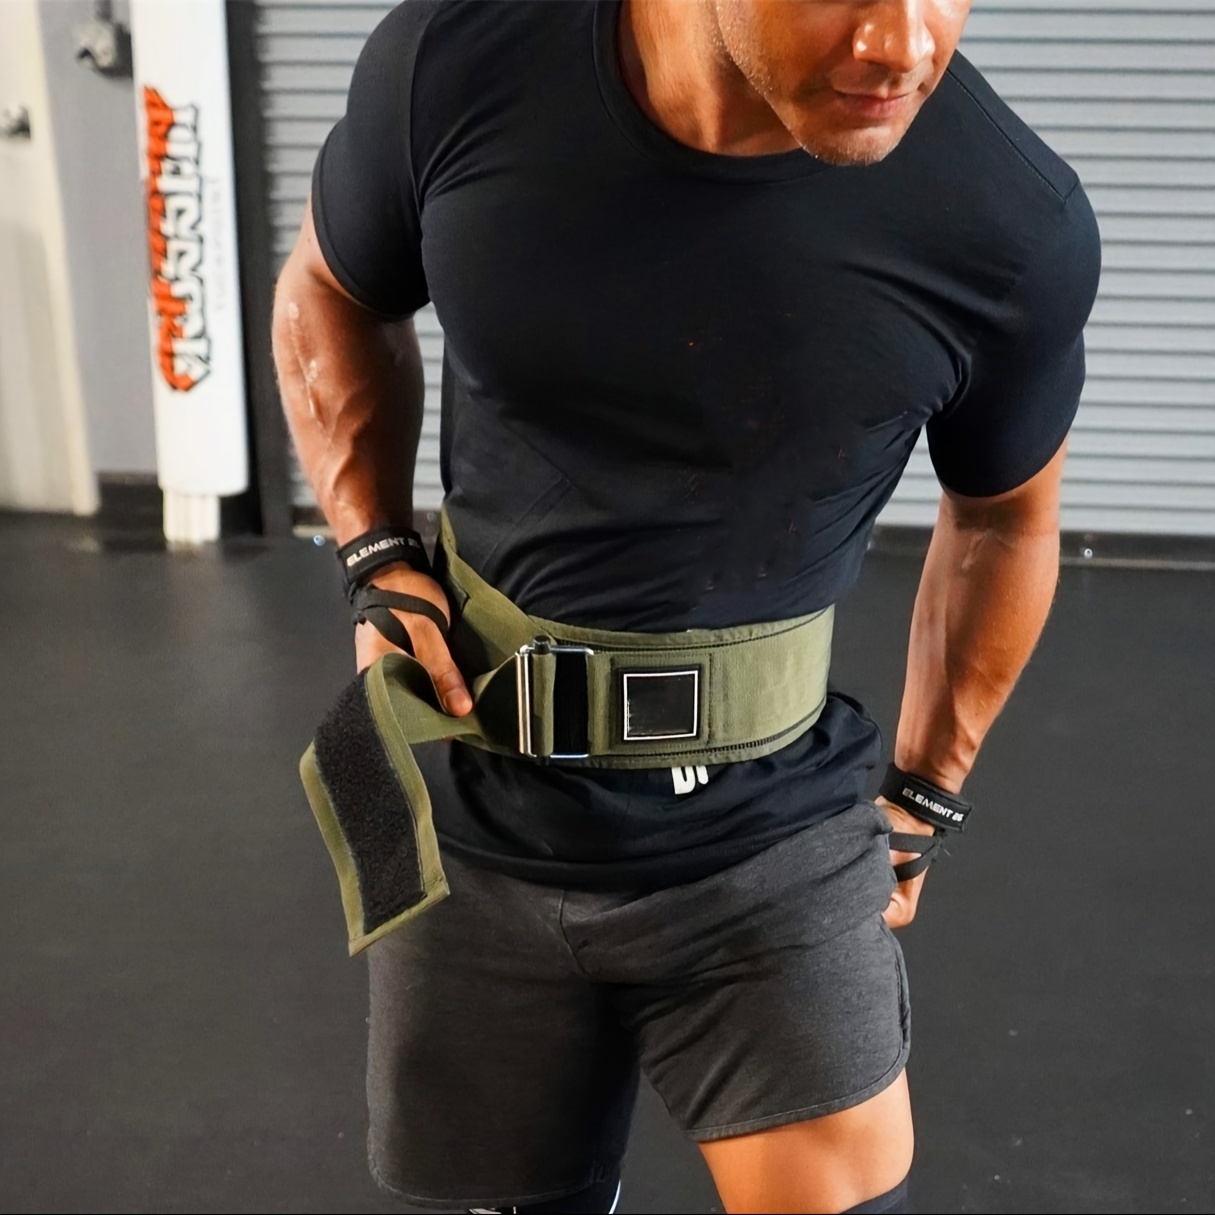  Self-Locking Weight Lifting Belt